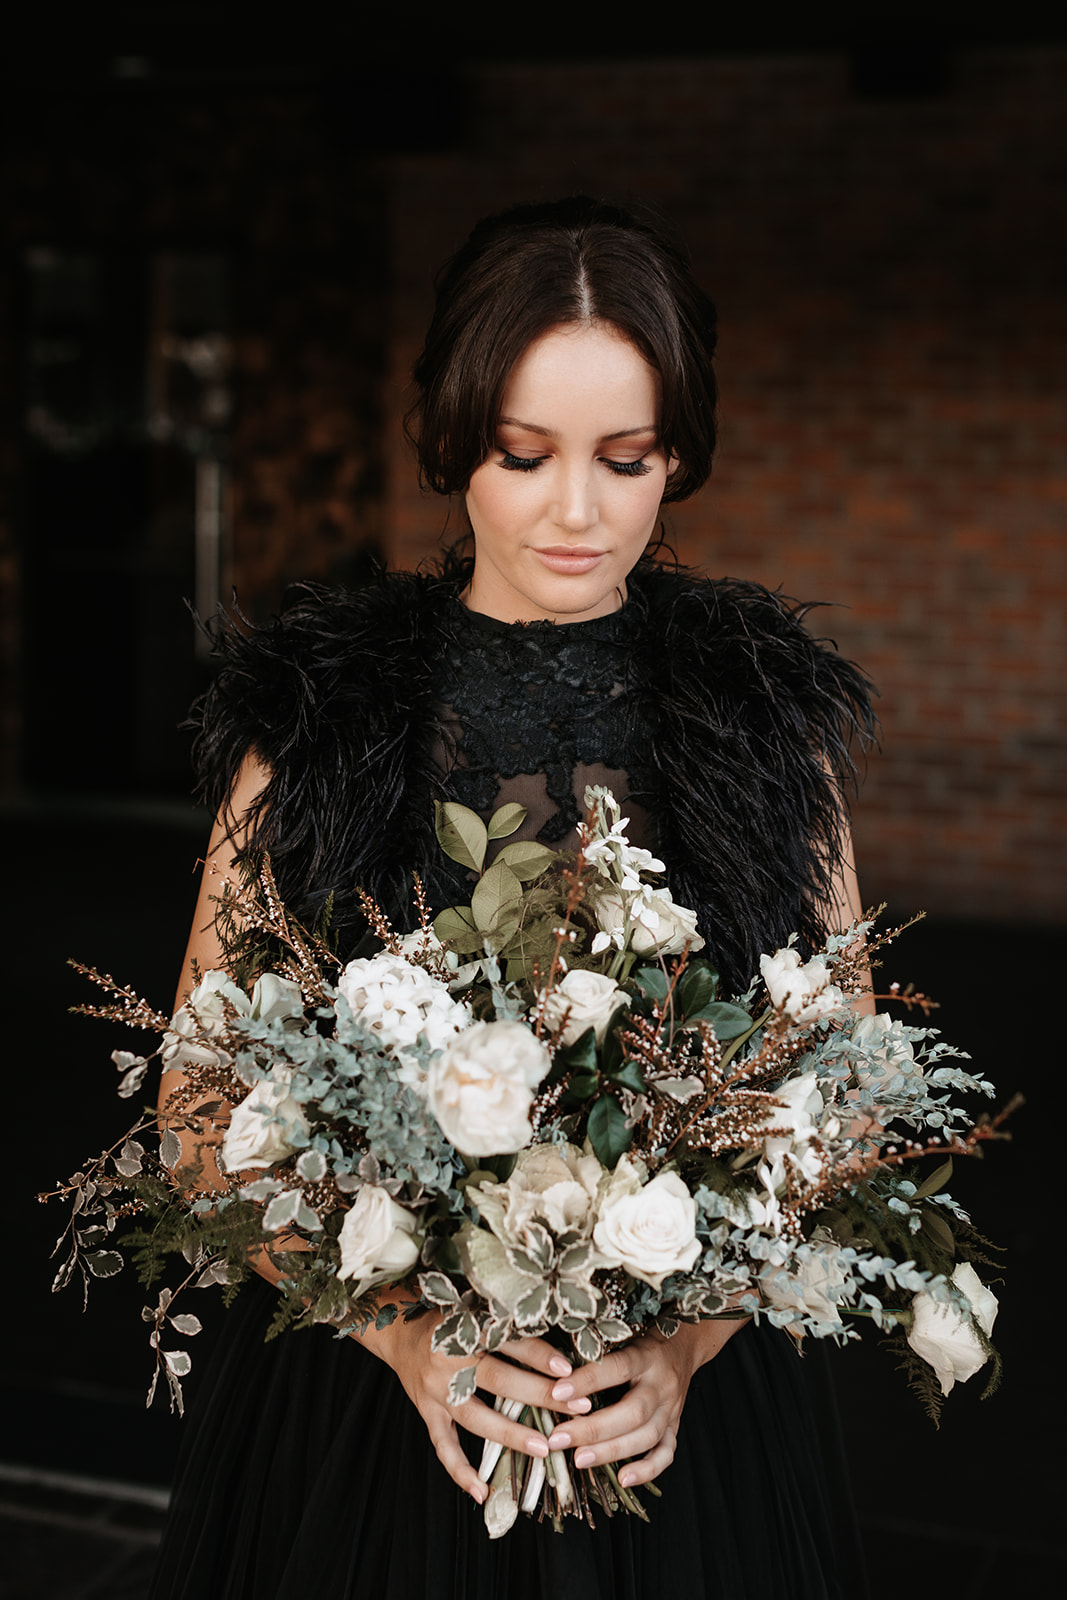 sundown film & photography brisbane bridal gown designer florals venue cake styling